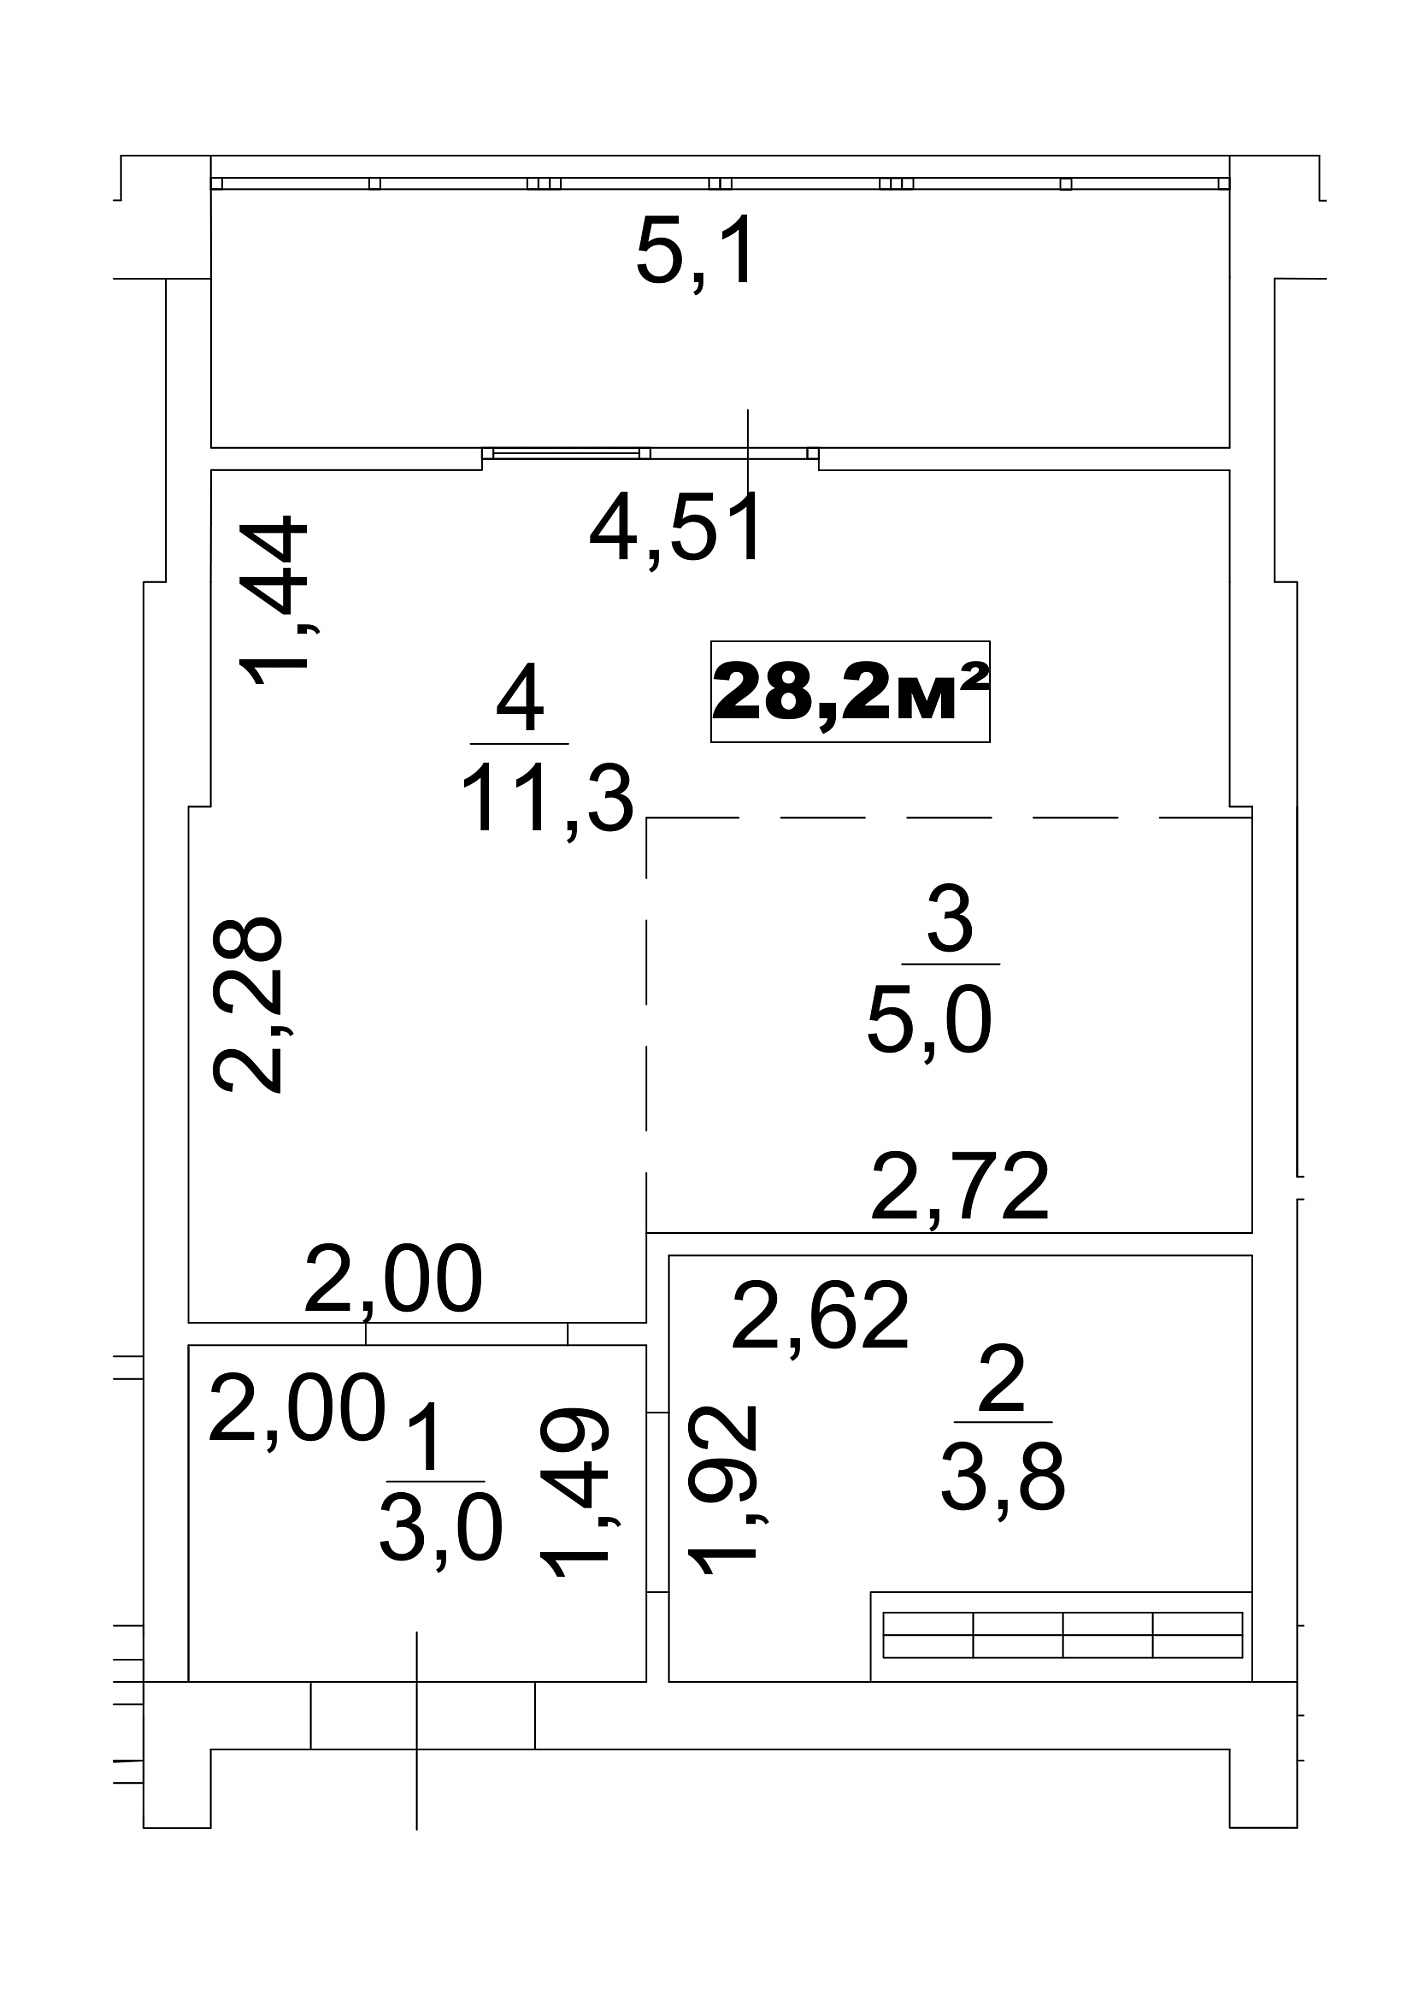 Planning Smart flats area 28.2m2, AB-13-04/00029.